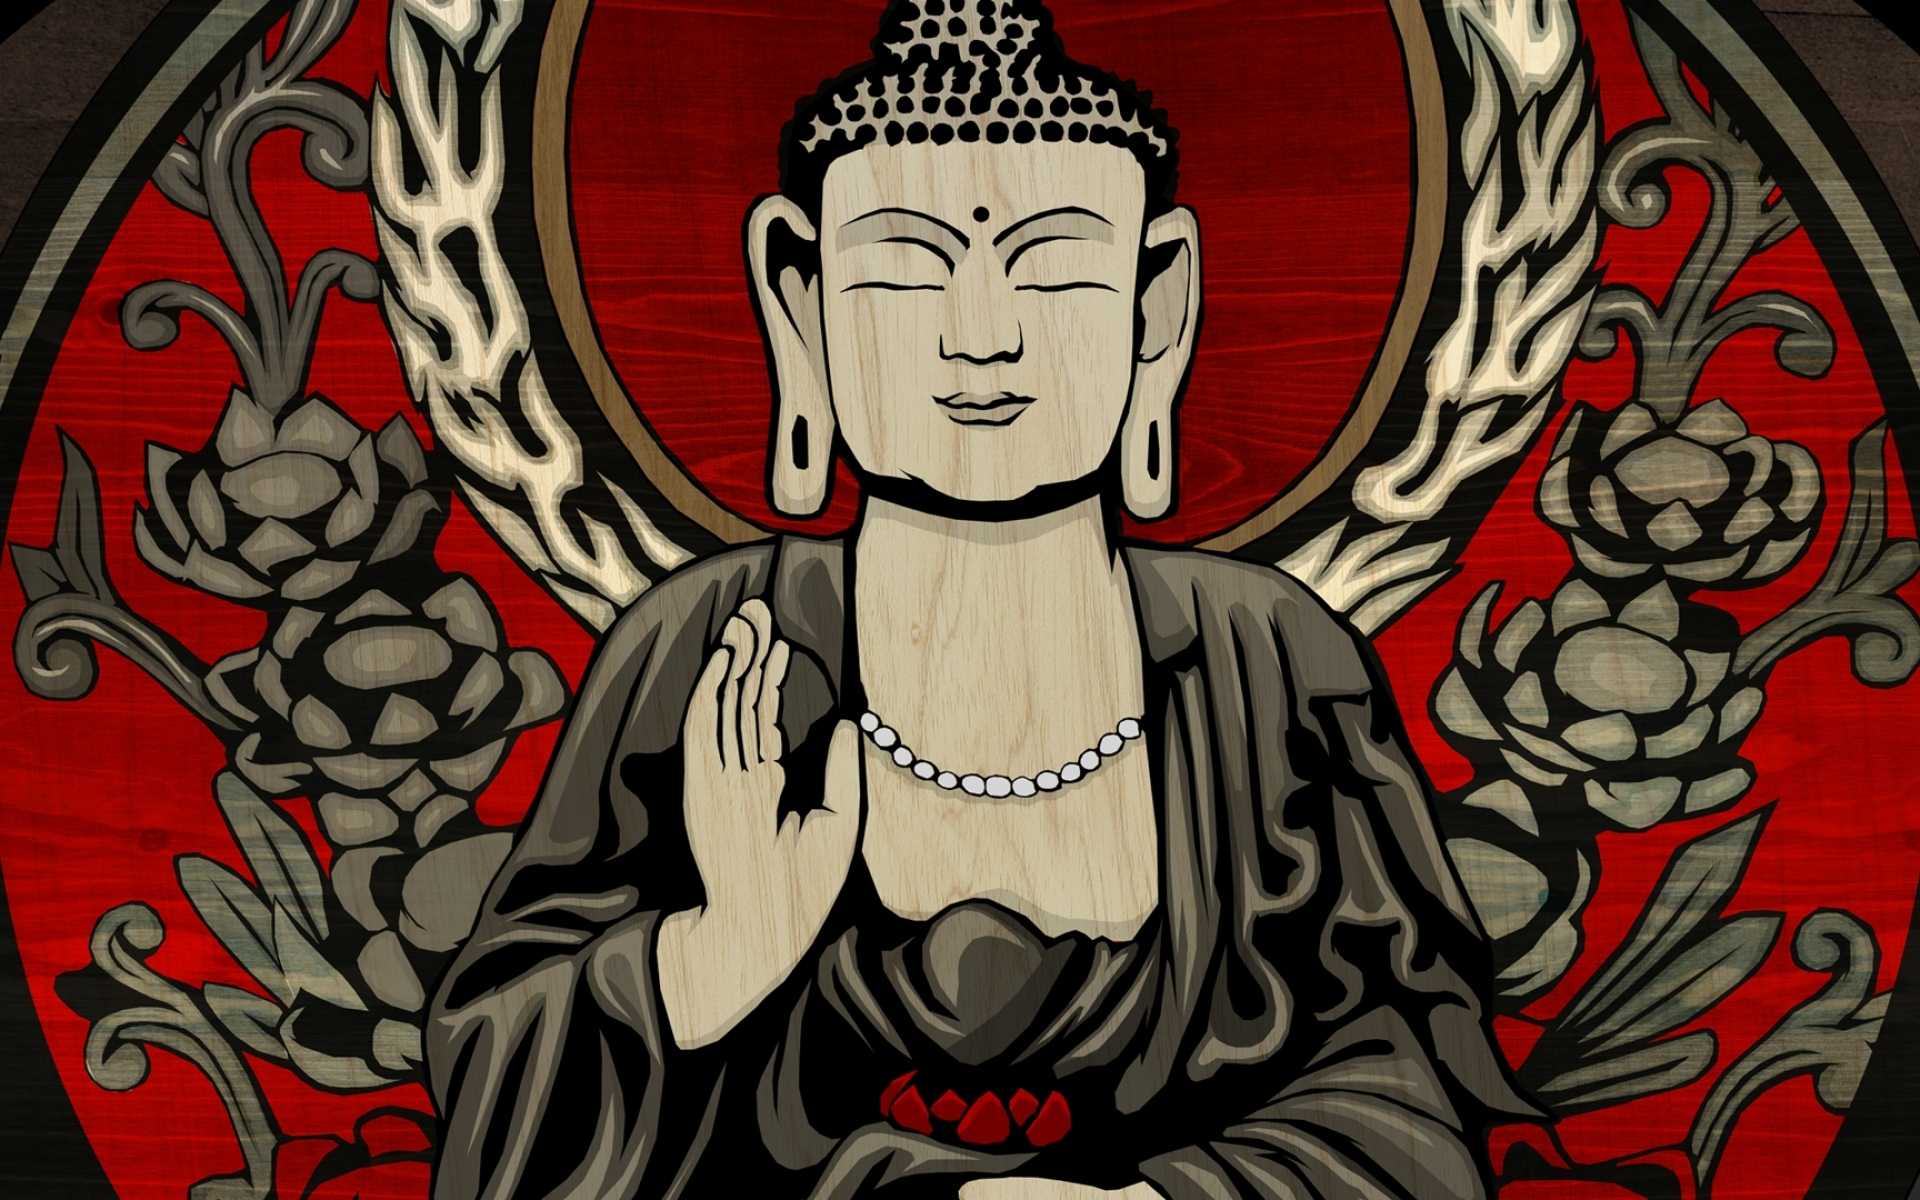 Buddha Wallpaper HD Best Collection Of Gautam Buddha